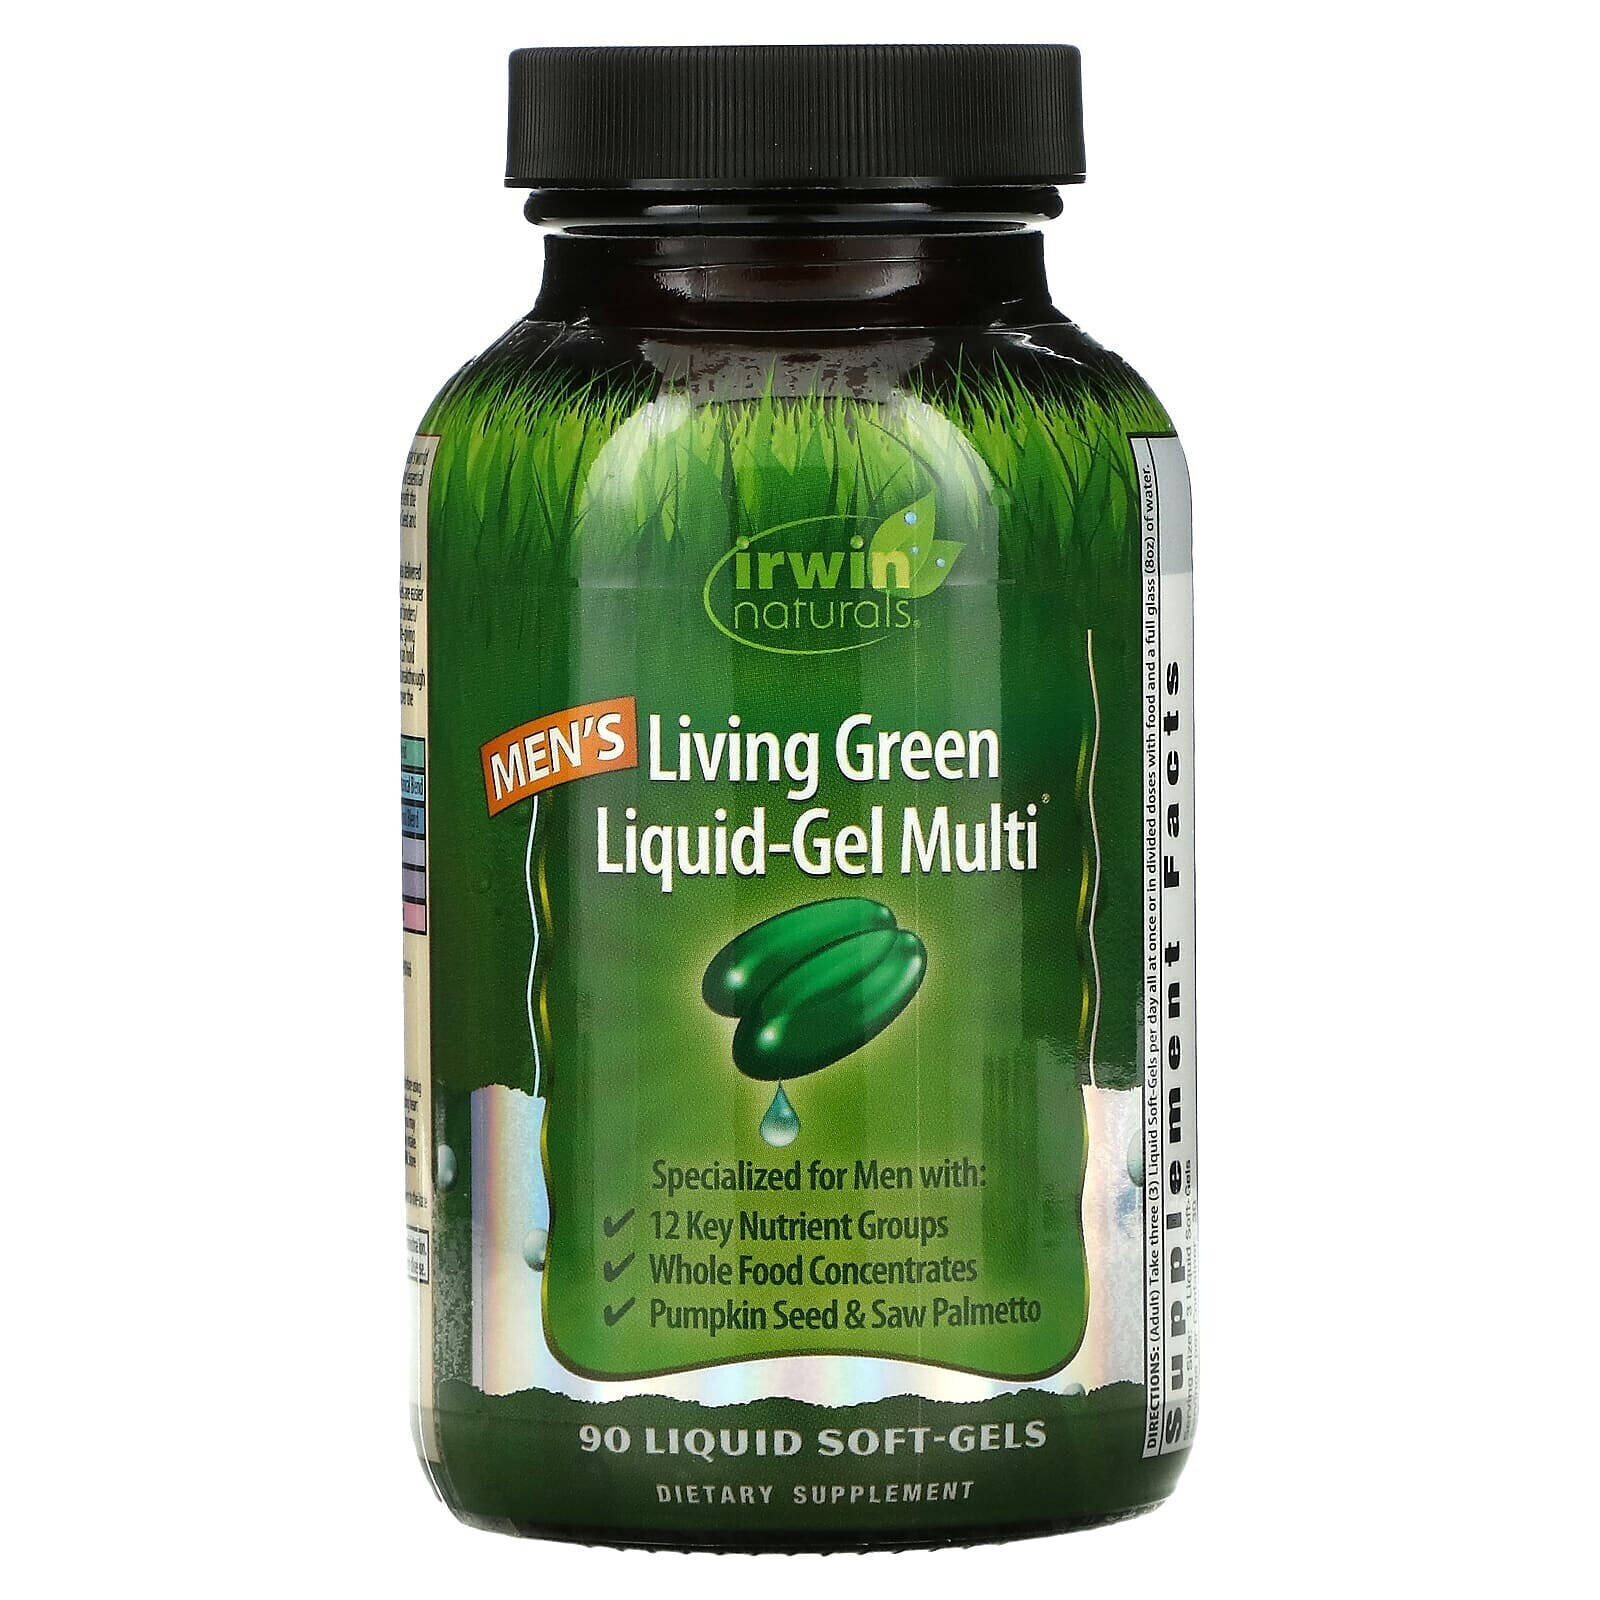 Men's Living Green Liquid-Gel Multi, 120 Liquid Soft-Gels